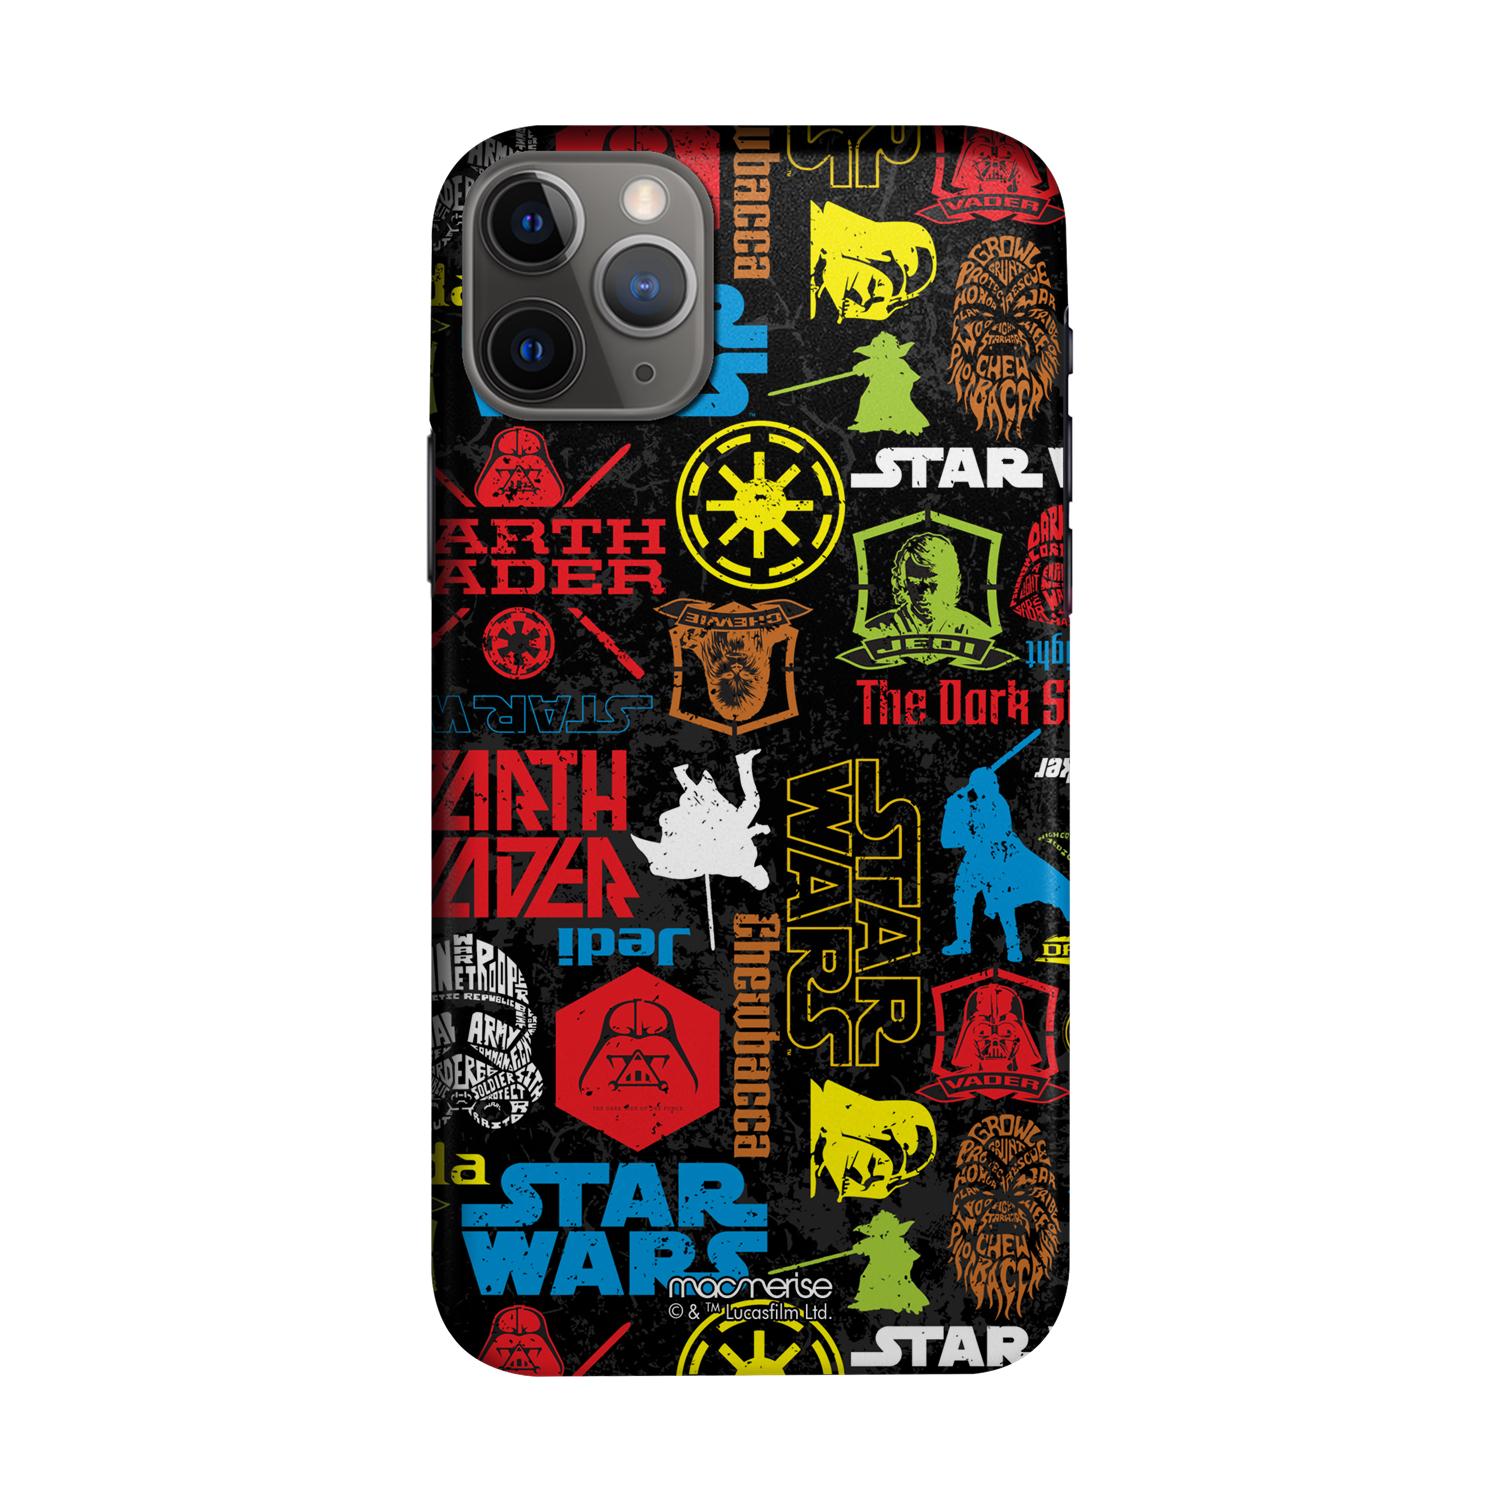 Buy Star wars mashup - Sleek Phone Case for iPhone 11 Pro Online